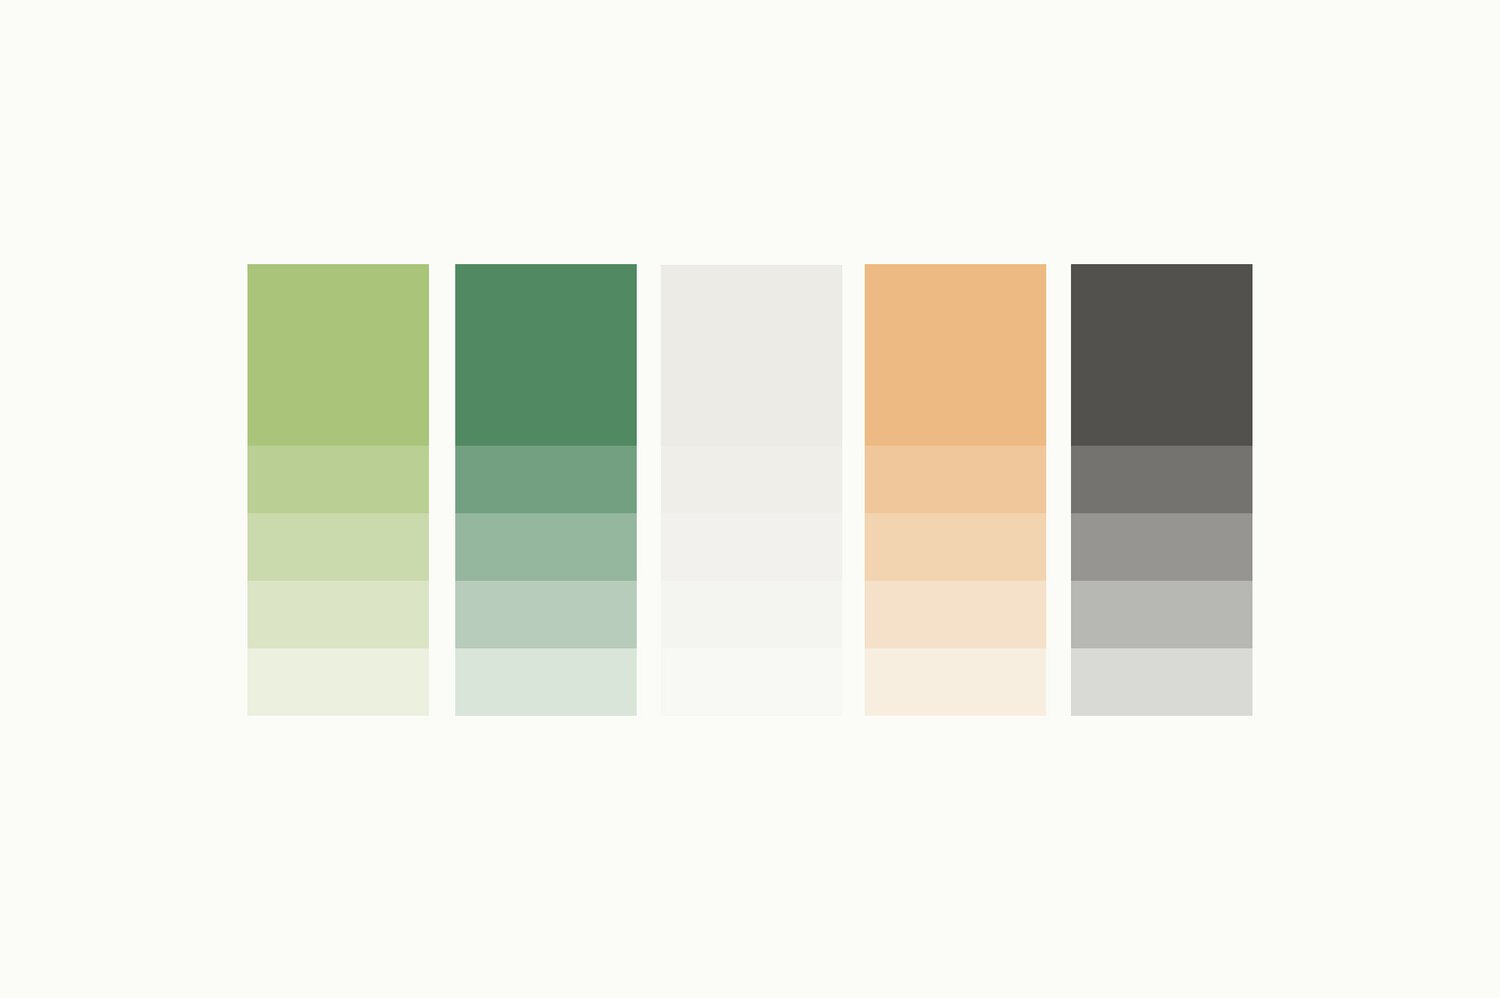 https://images.squarespace-cdn.com/content/v1/62f8457f64cbde5f251eba74/1671499105860-XVG66DGAYBF81VZ3D41G/Brand-color-palette-example.jpg